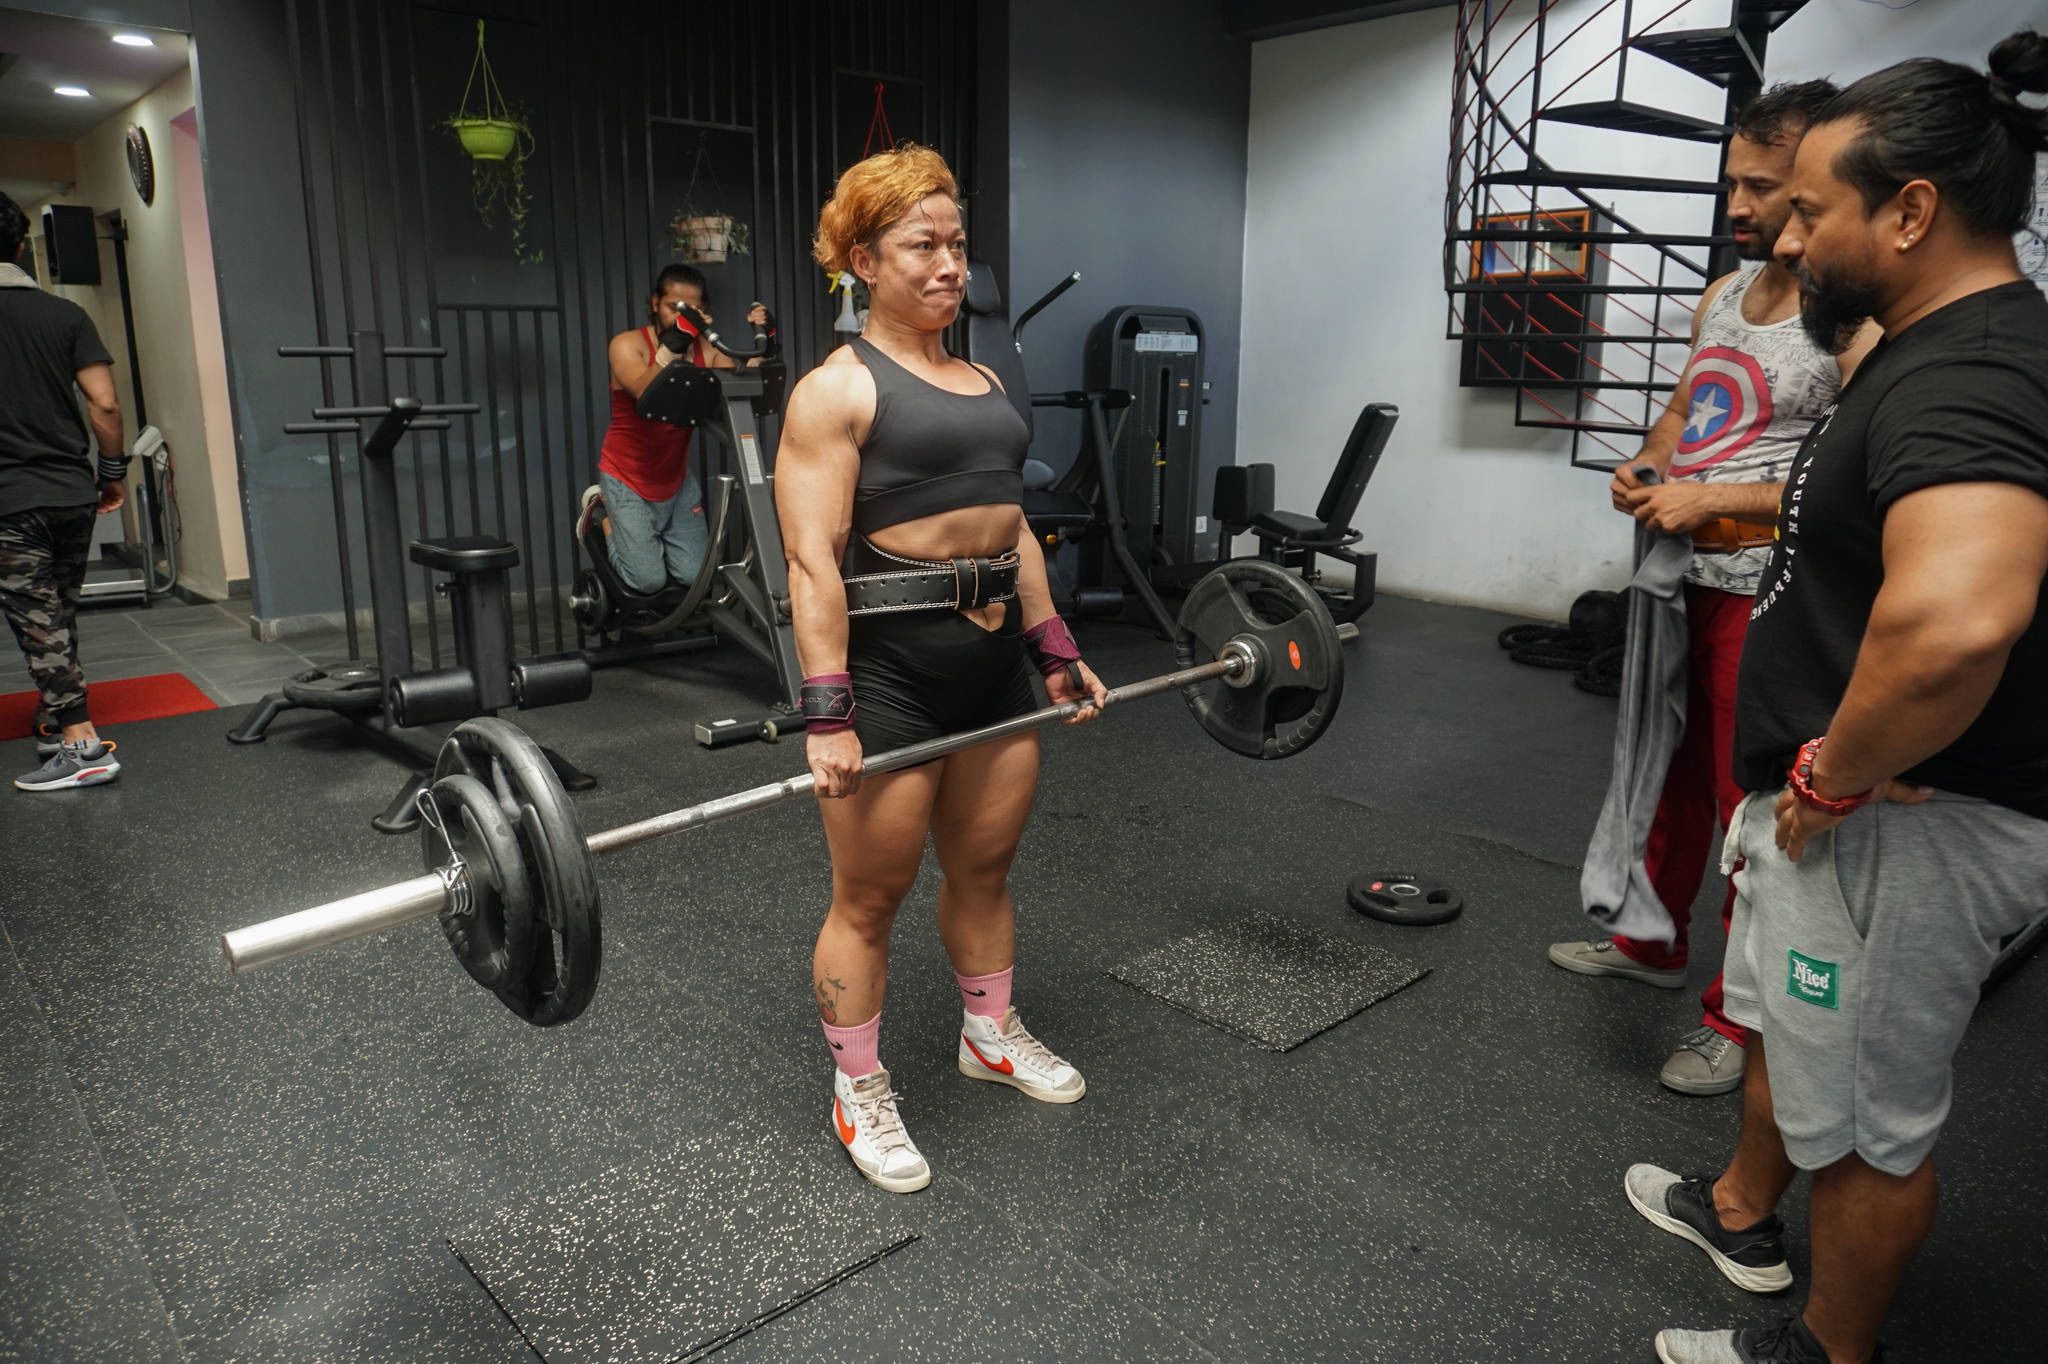 Women Bodybuilders Need Extra Strength to Combat Sexism in Nepali Culture